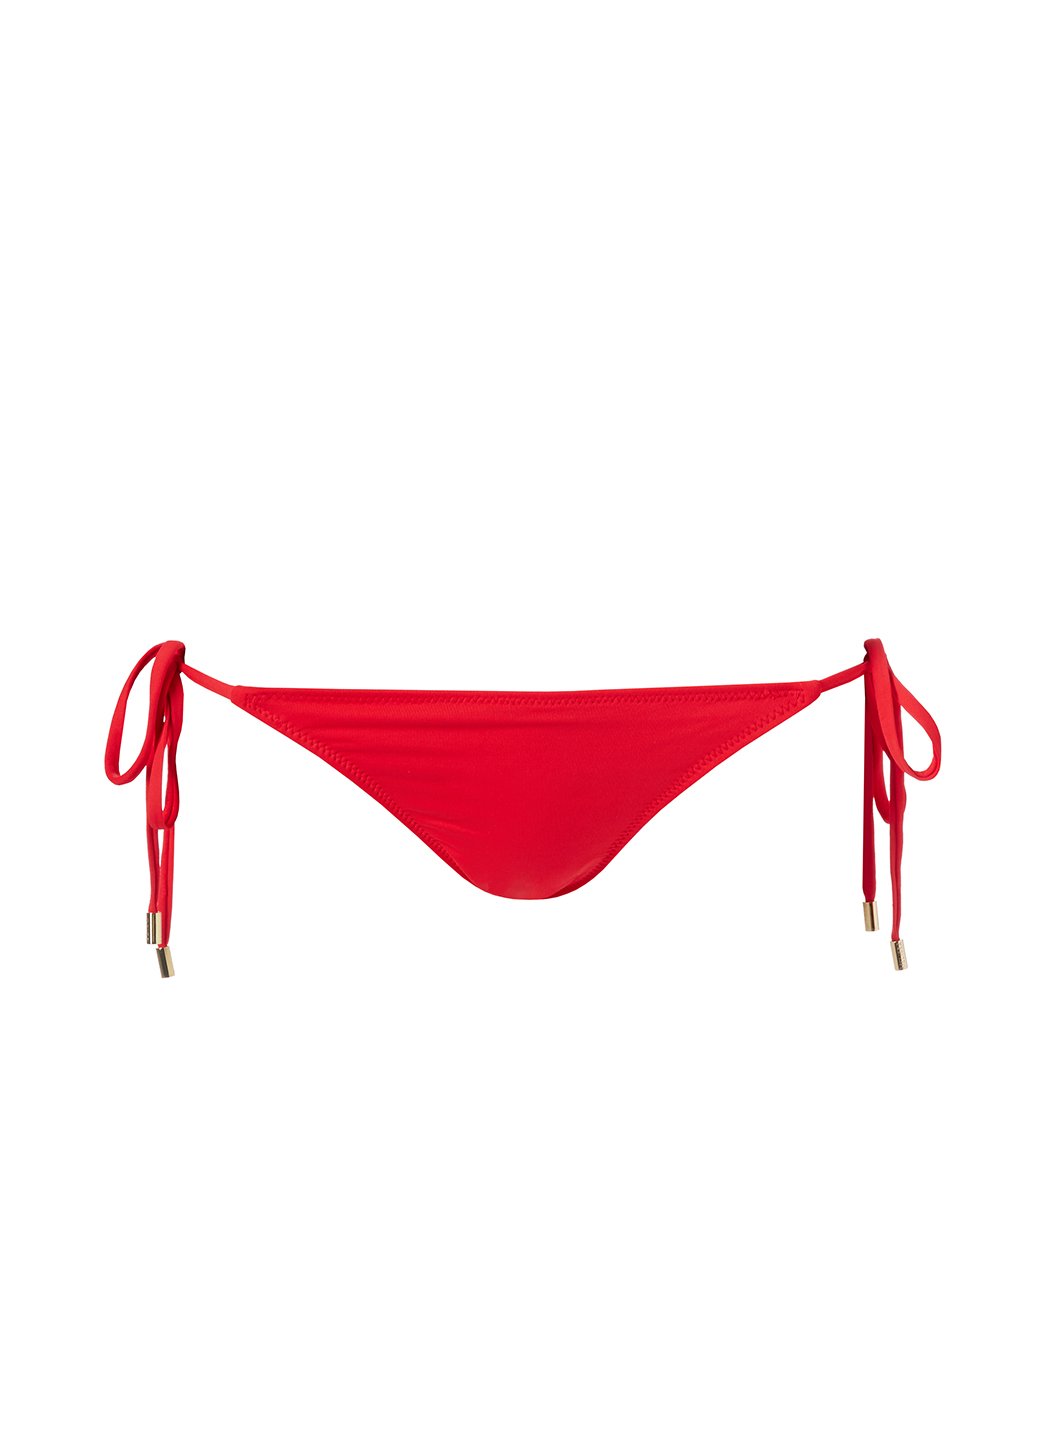 maldives-red-chain-trim-triangle-bikini-bottom